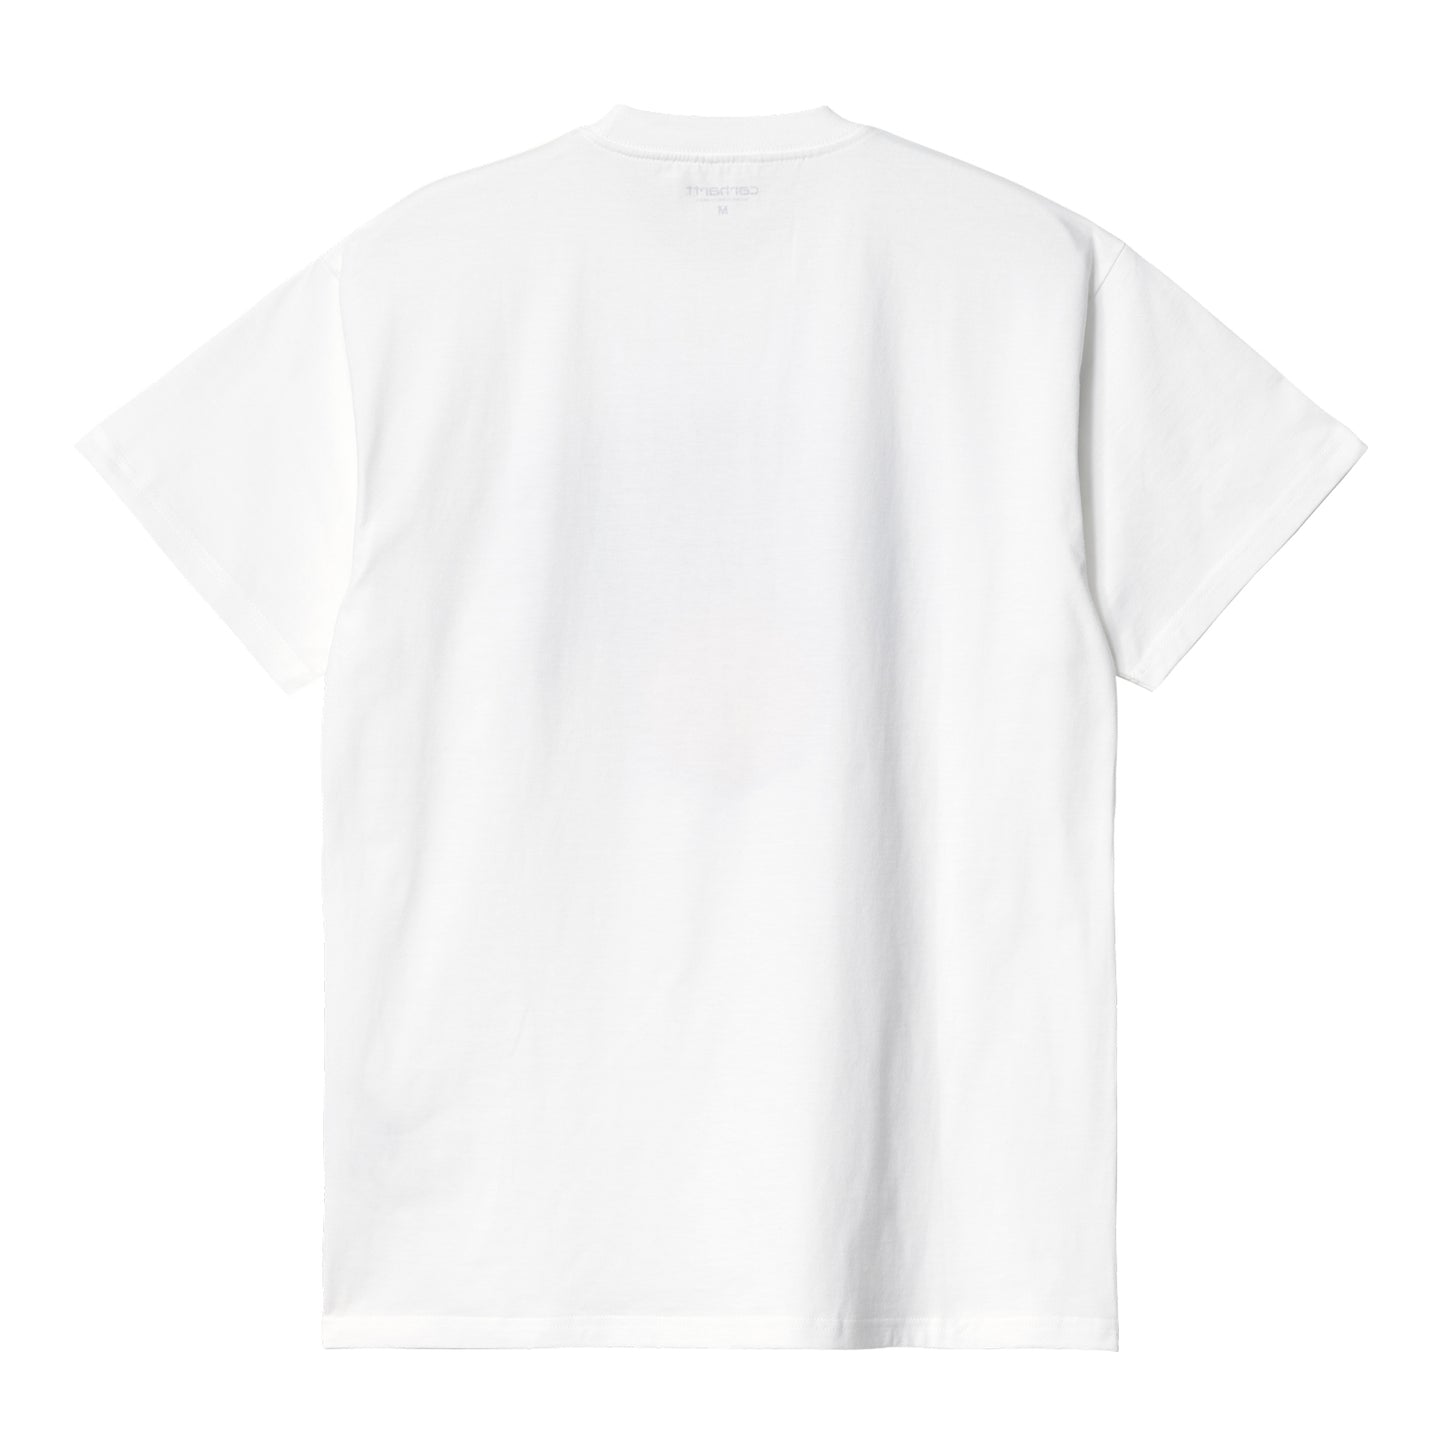 Carhartt WIP Upside Down T-Shirt White. Foto de trás.